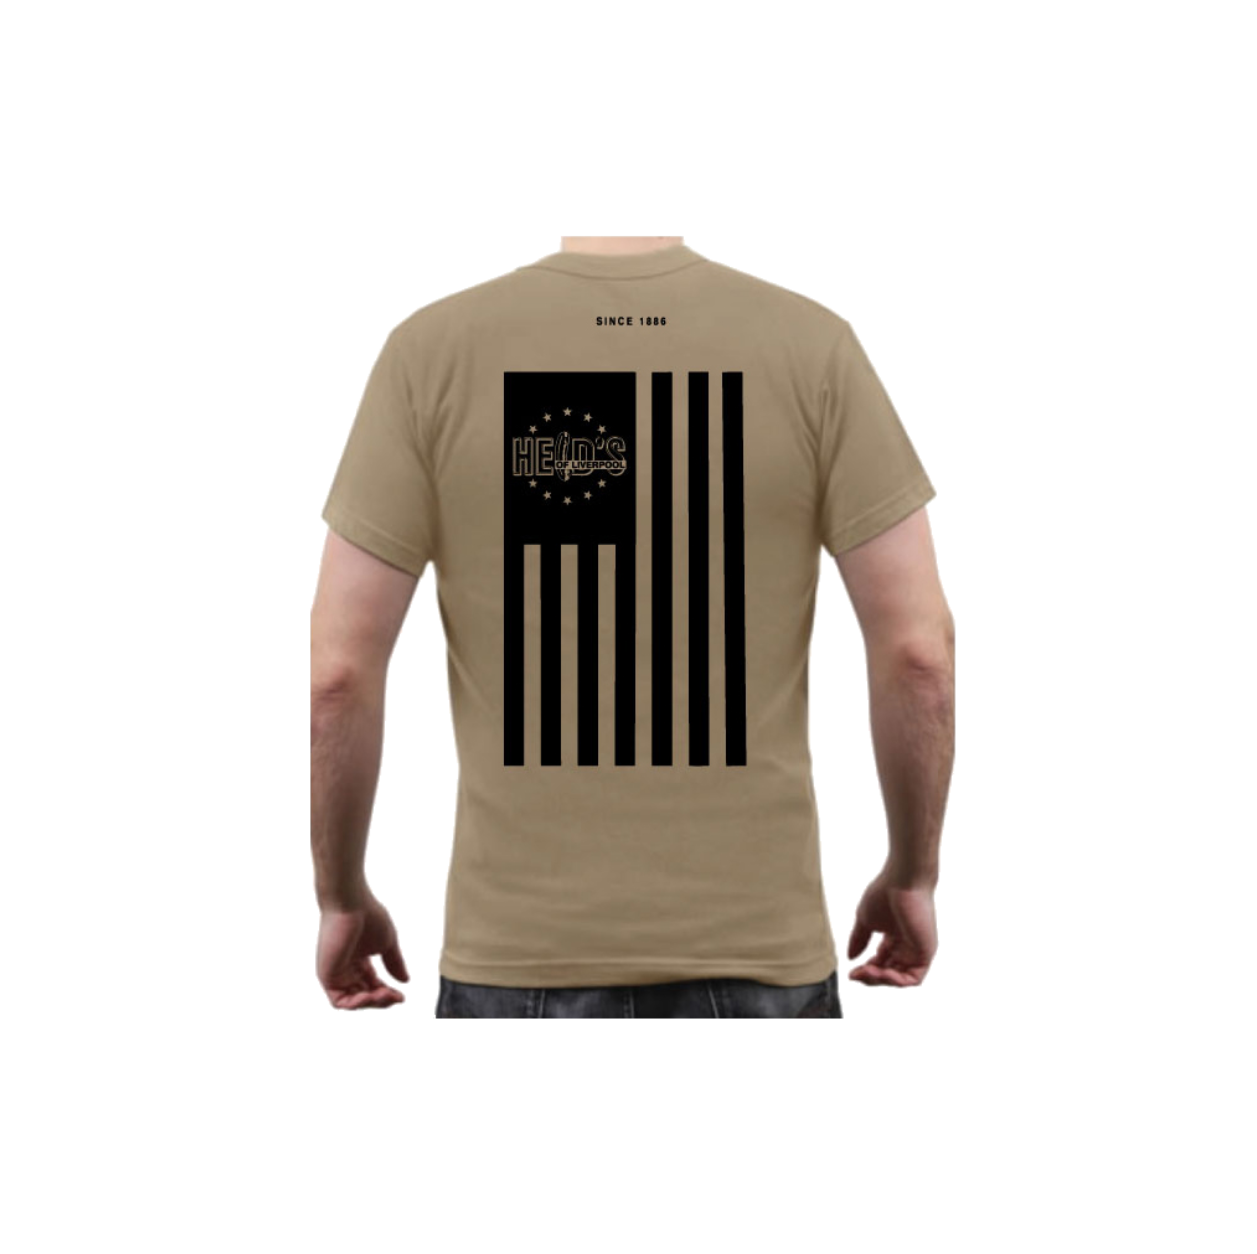 Heid's Patriotic T-Shirt